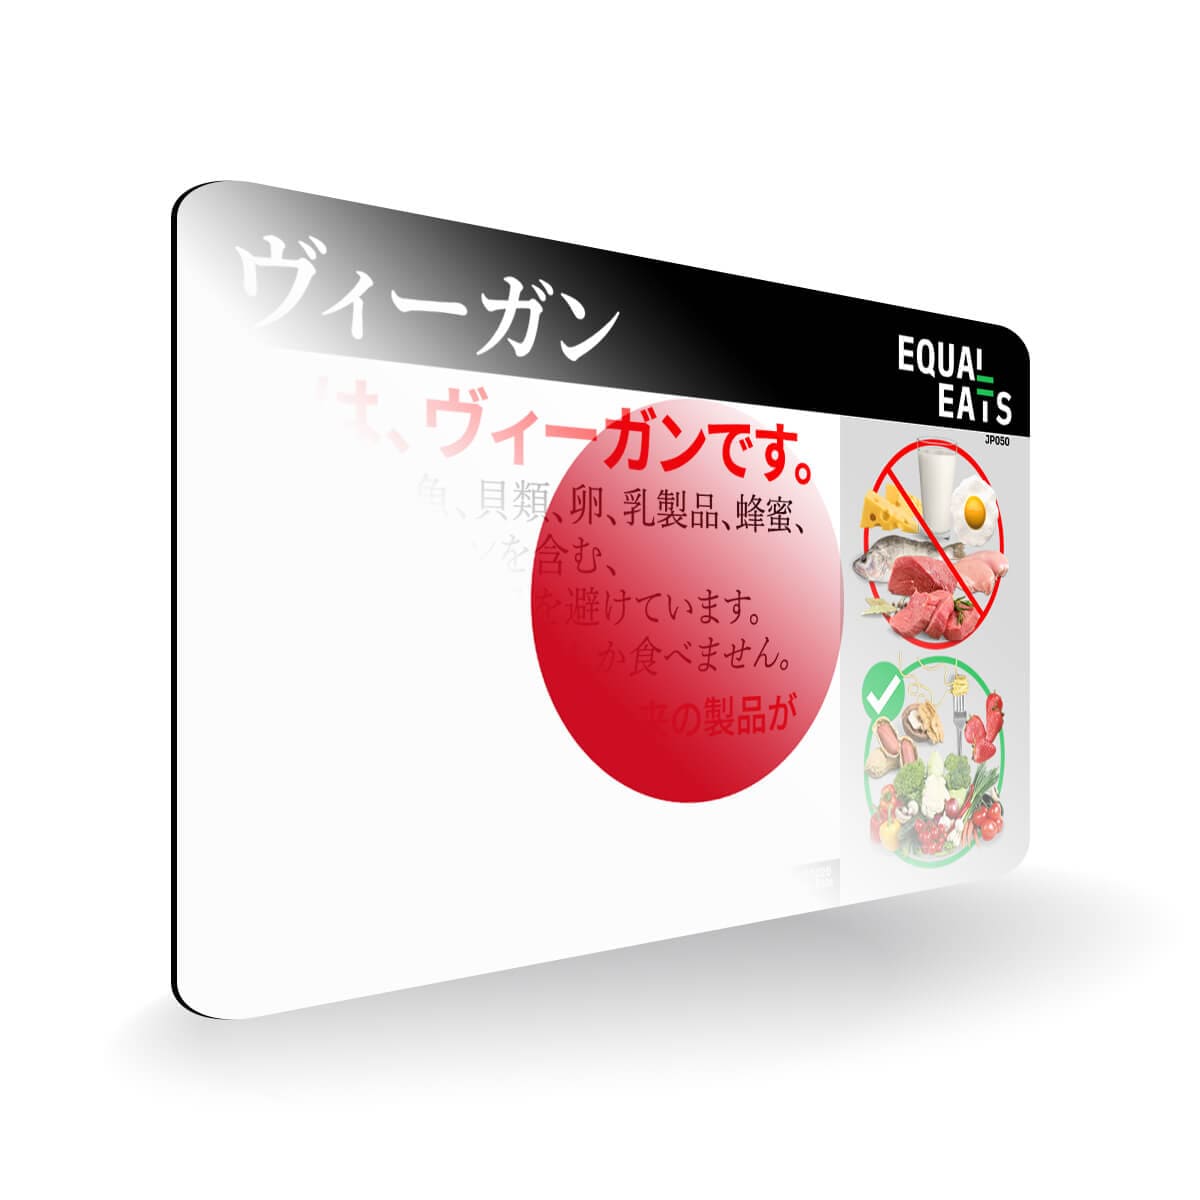 Vegan Diet in Japanese. Vegan Card for Japan